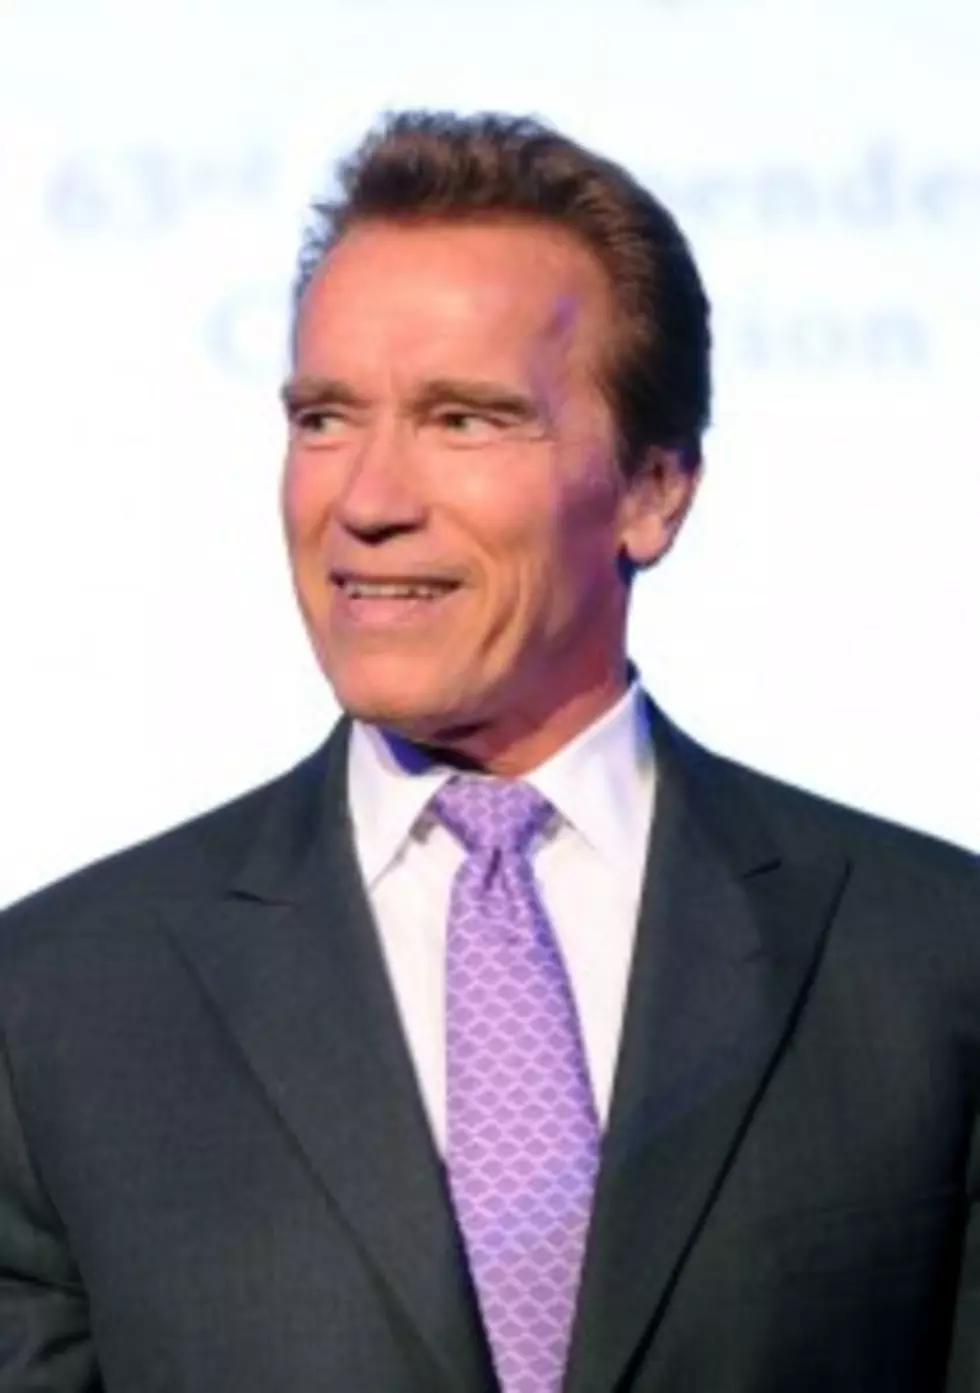 Arnold Schwarzenegger Messes Up Big Time